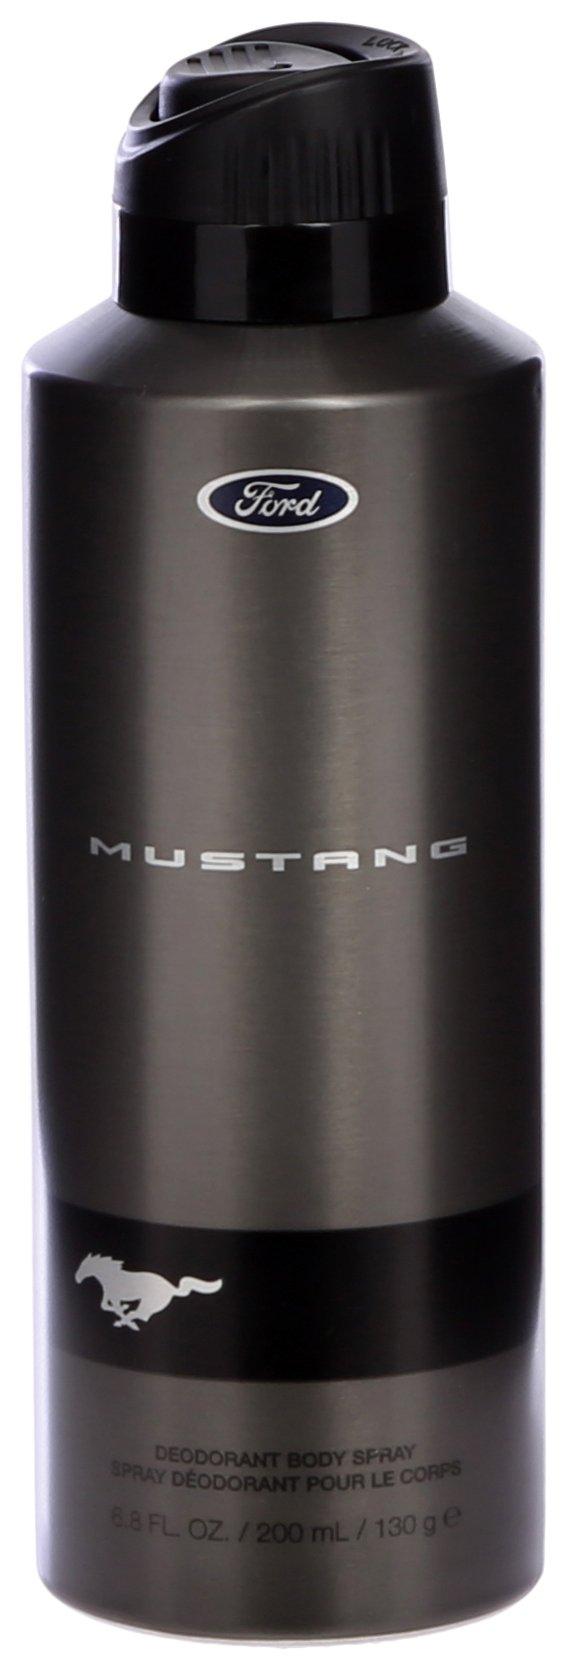 Mustang 6.8 Fl.Oz. Deodorant Body Spray